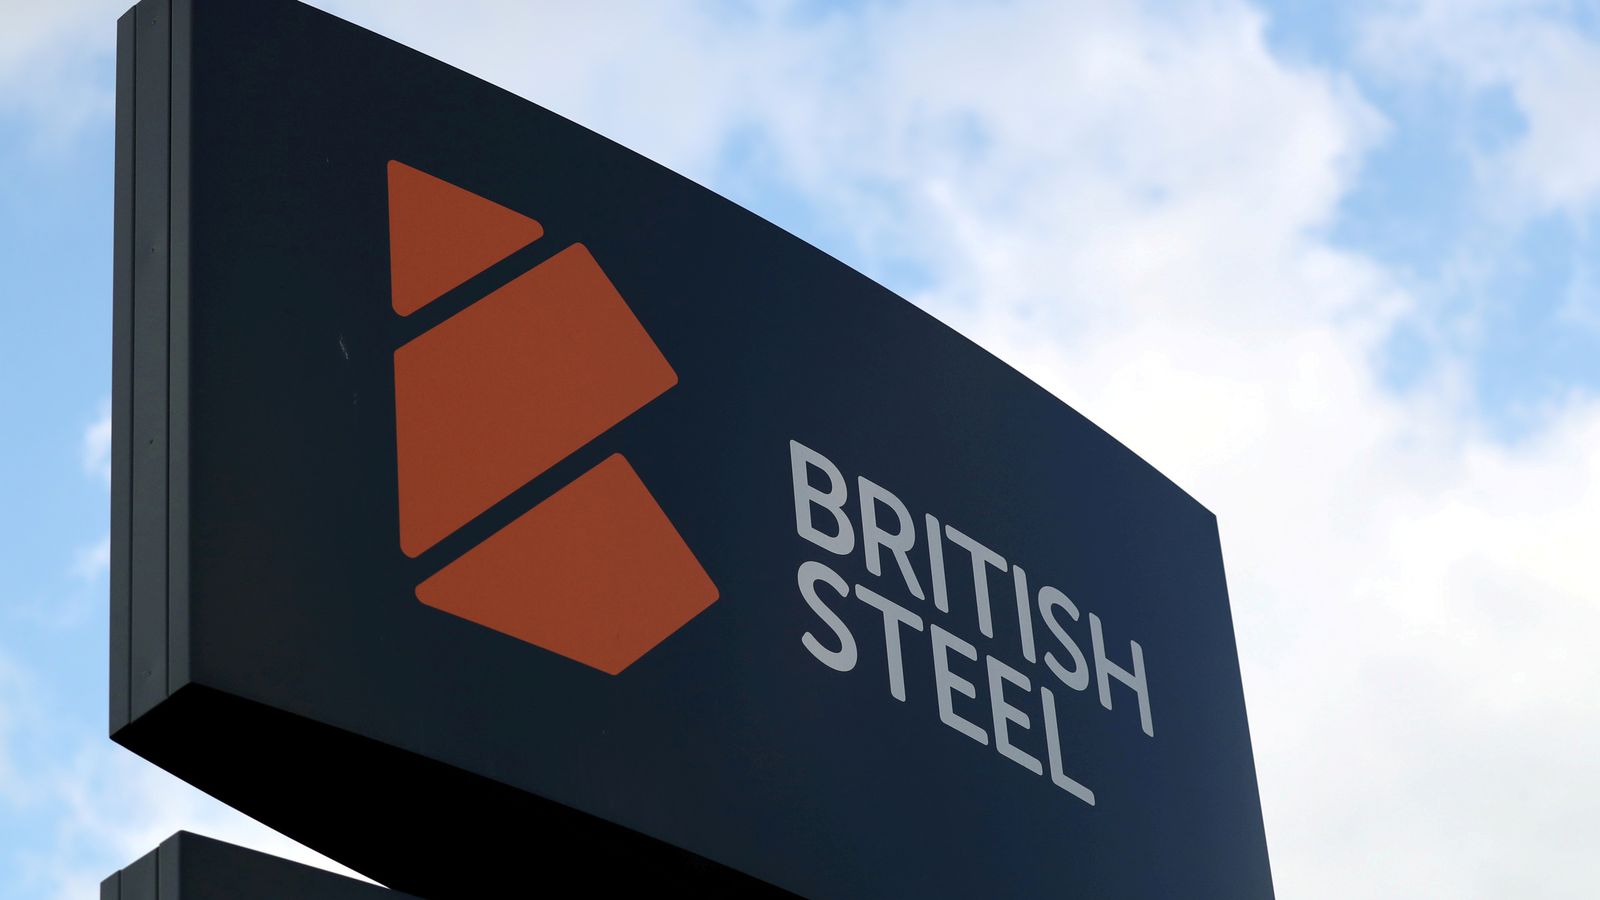 British Steel cuts 7% of workforce despite government funding talks |  businessnews